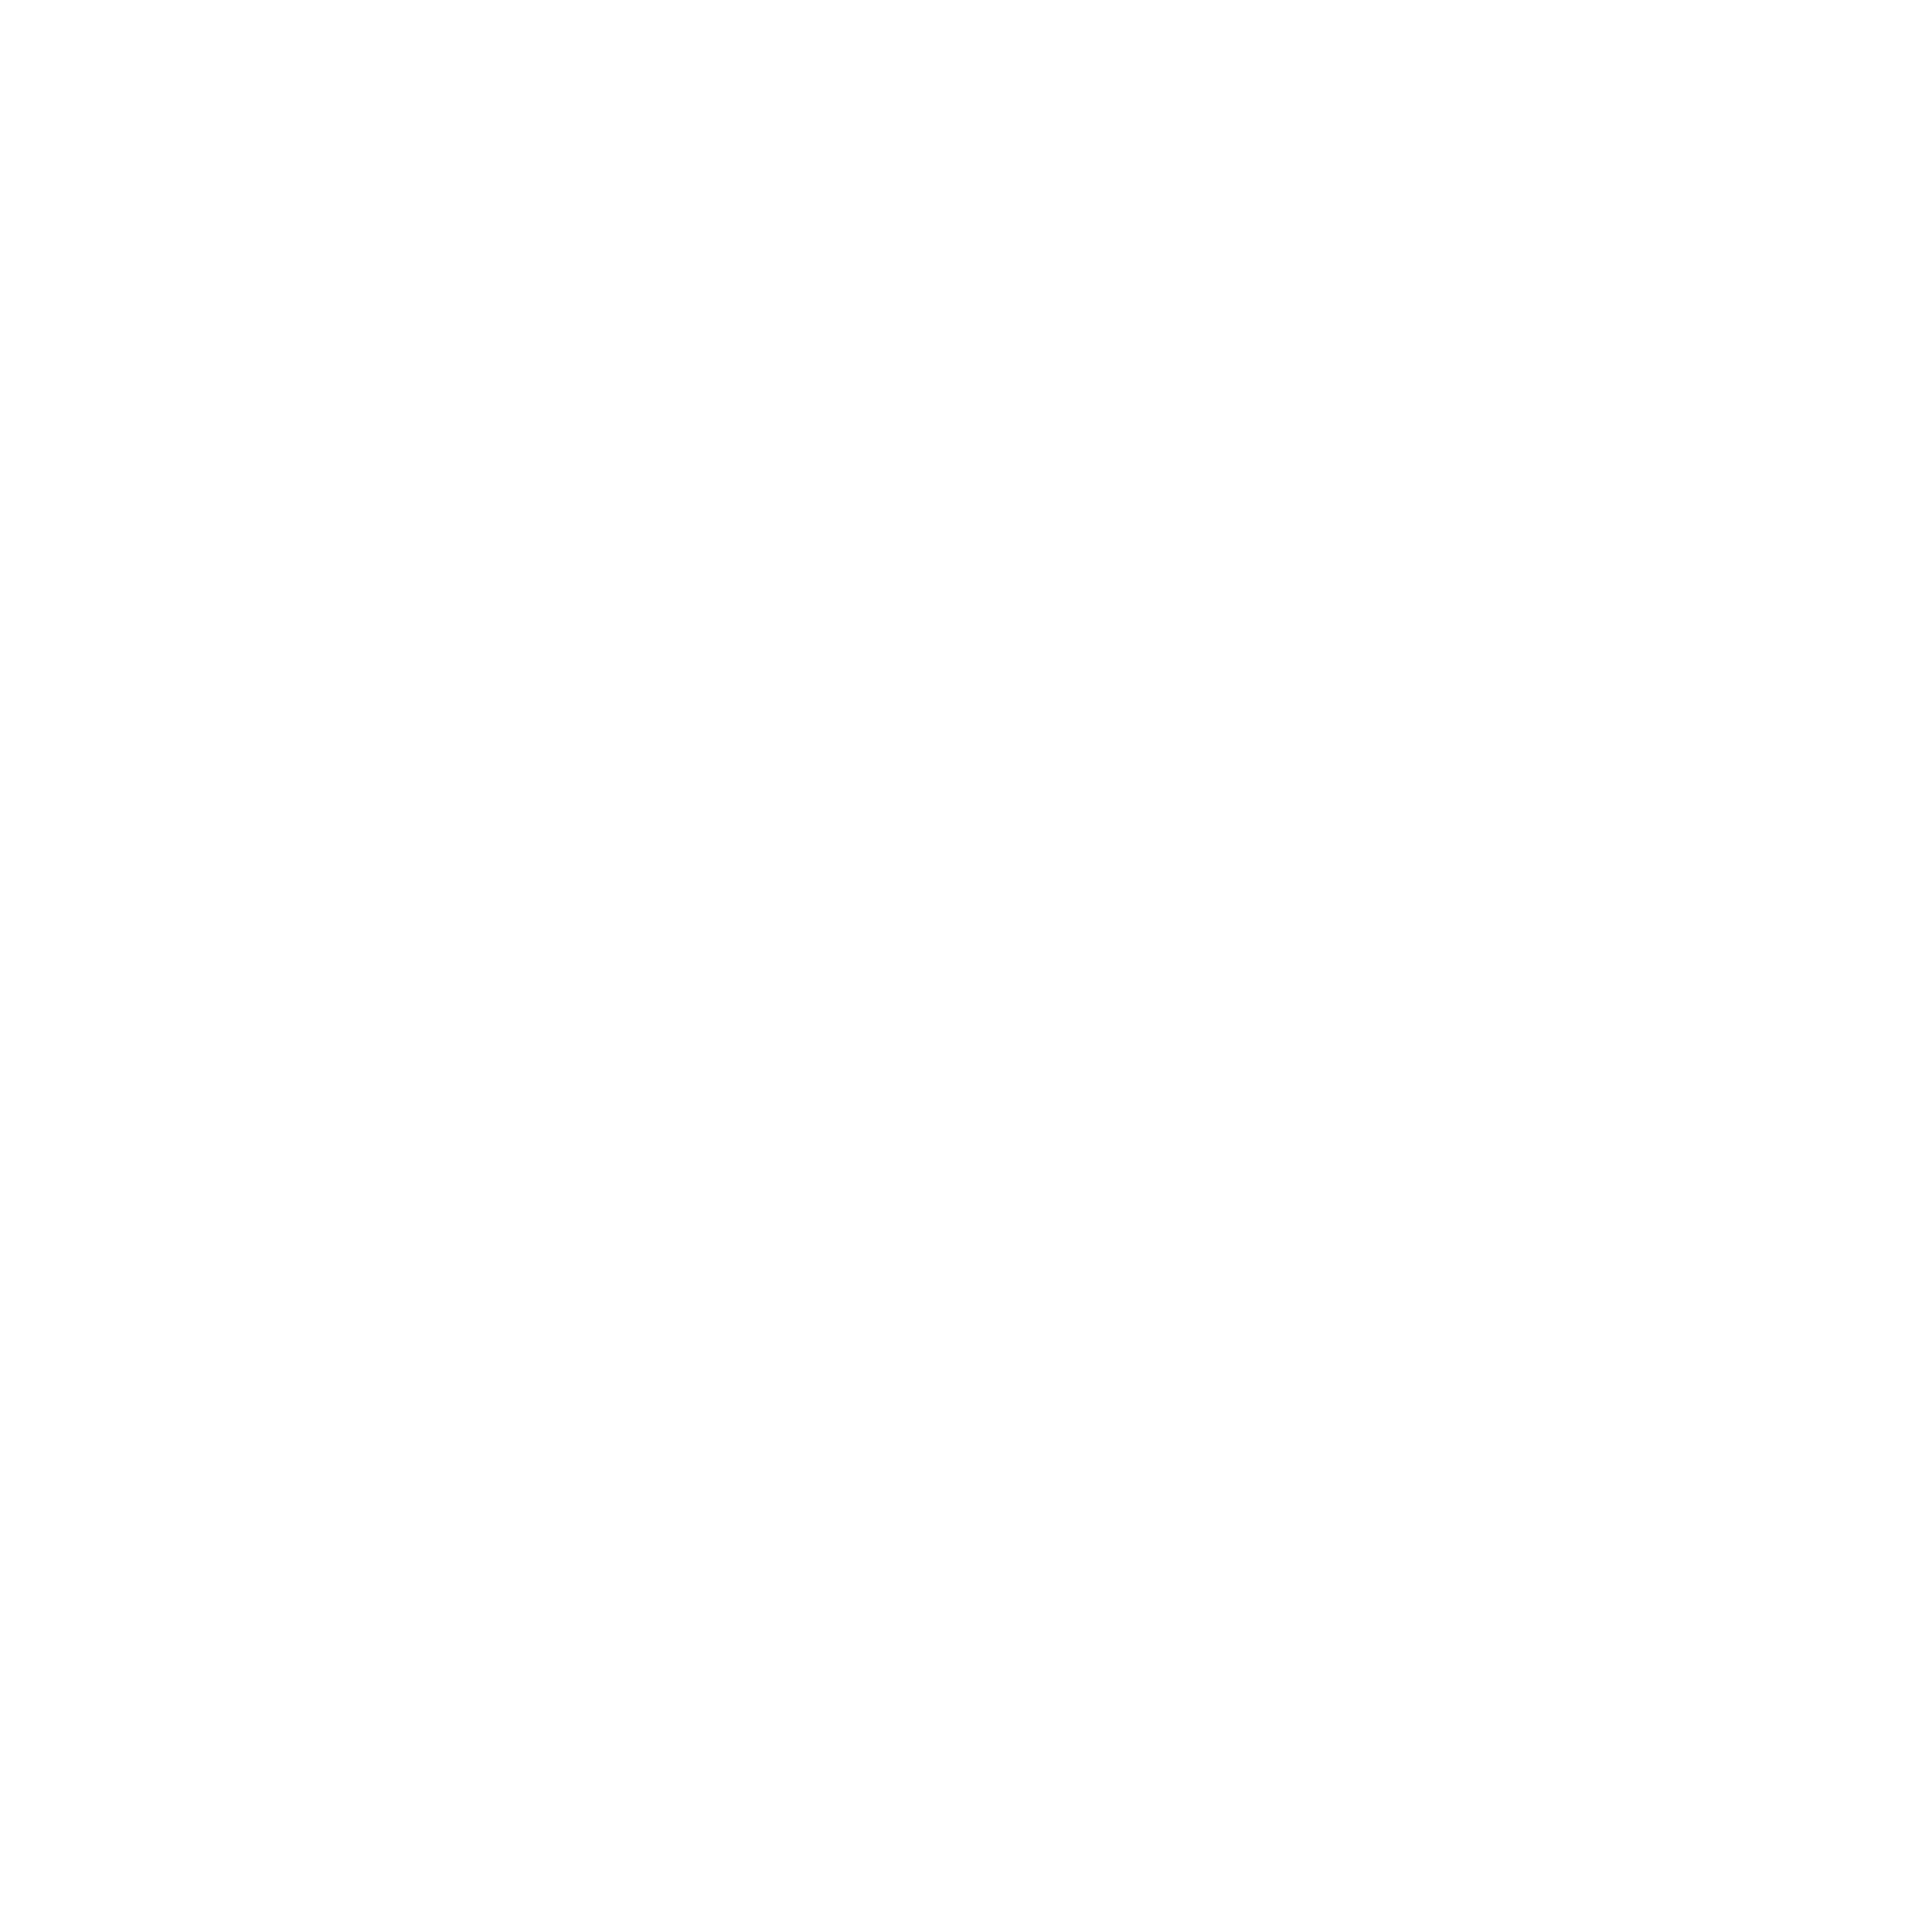 Jesus heart